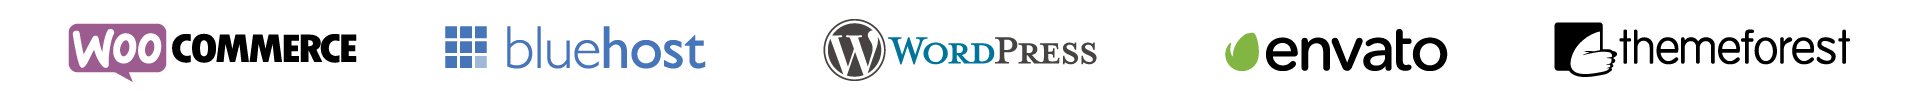 Preços para Criar sites Wordpress 1